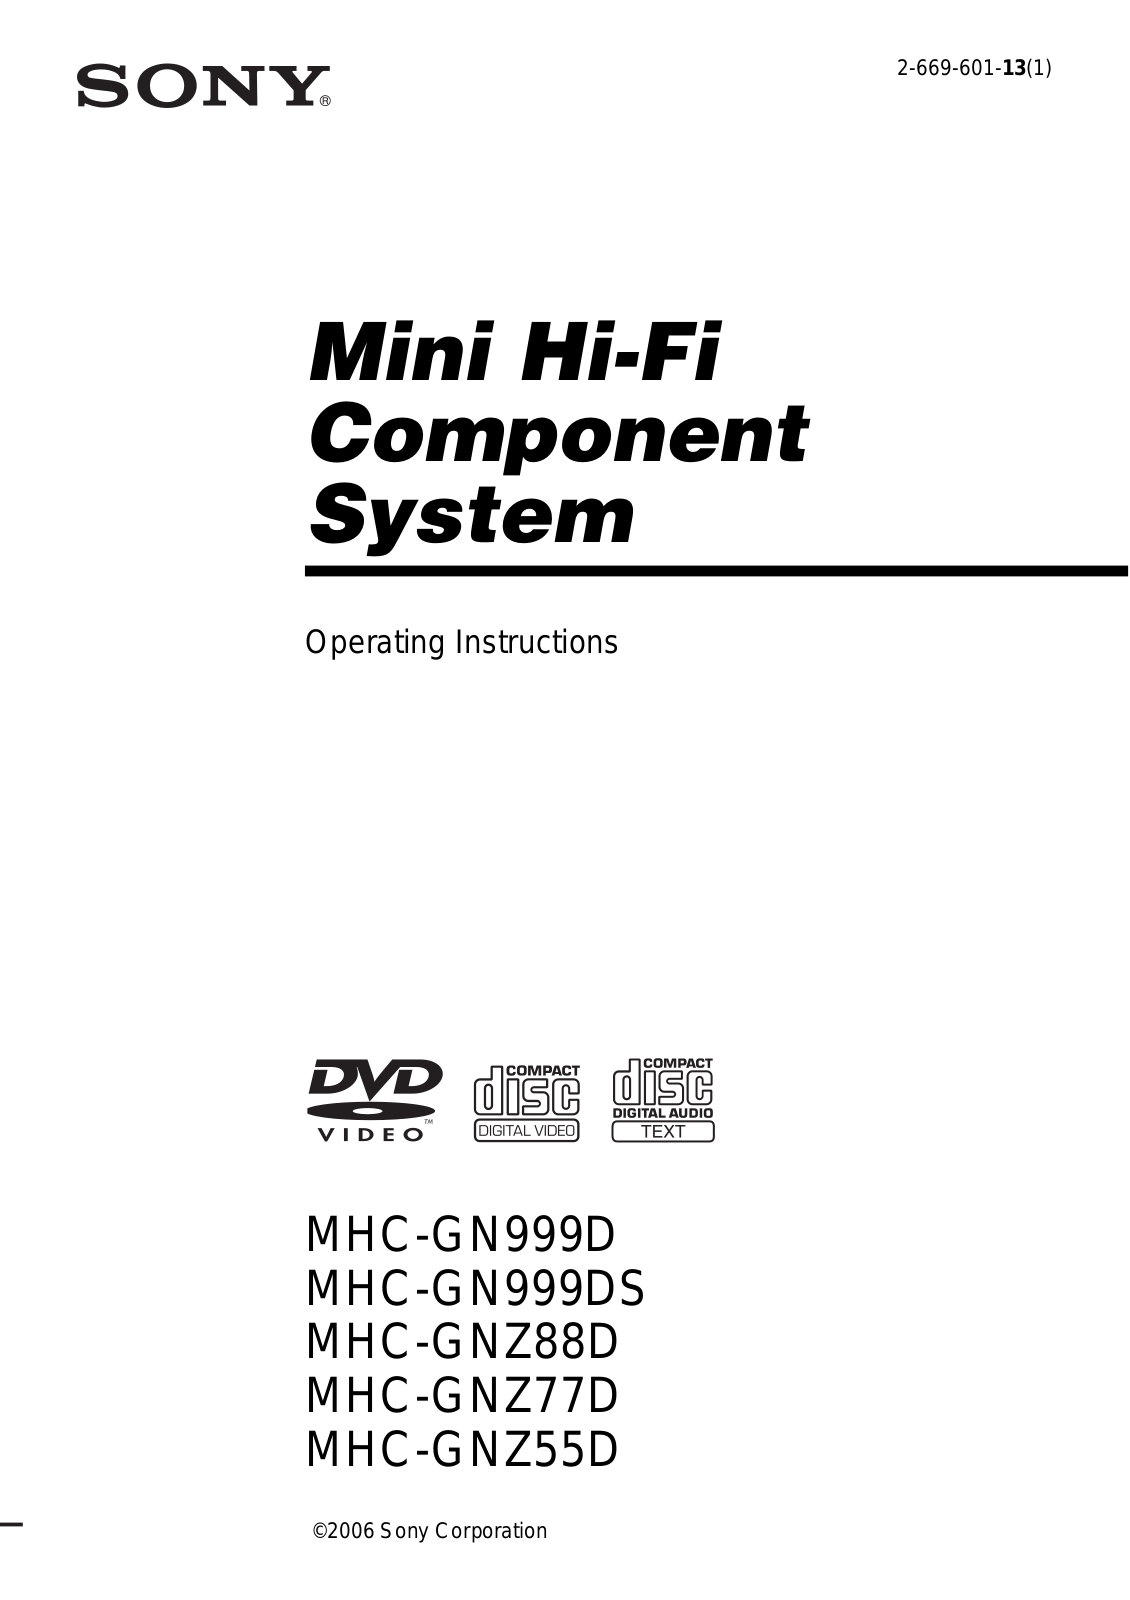 Sony MHC-GNZ55D, MHC-GN999DS, MHC-GNZ88D, MHC-GNZ77D, MHC-GN999D User Manual